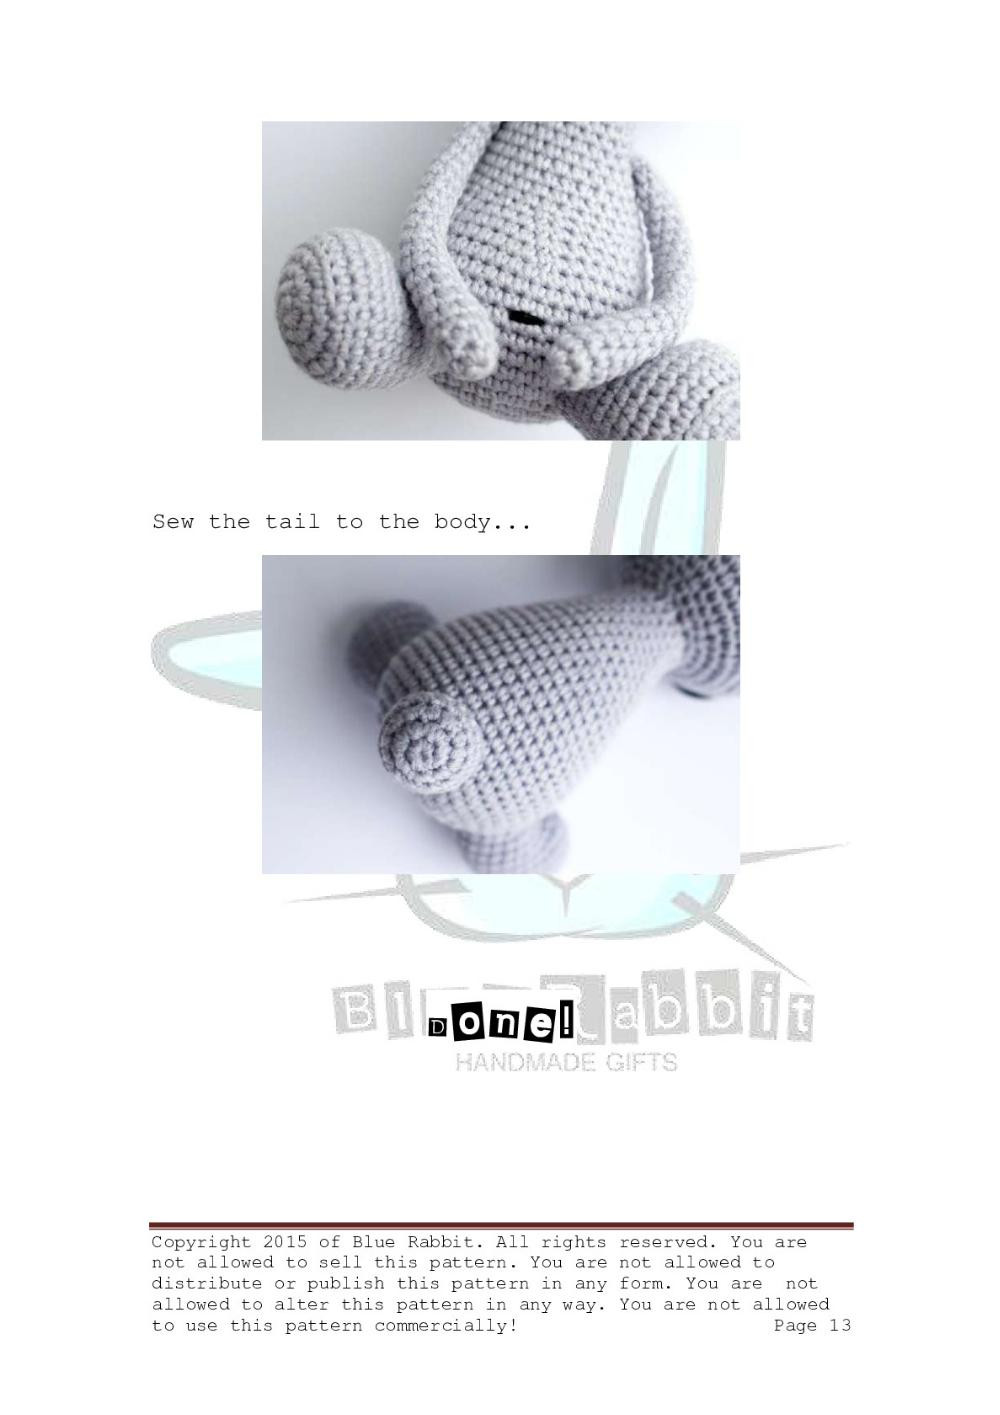 Grey rabbit crochet pattern